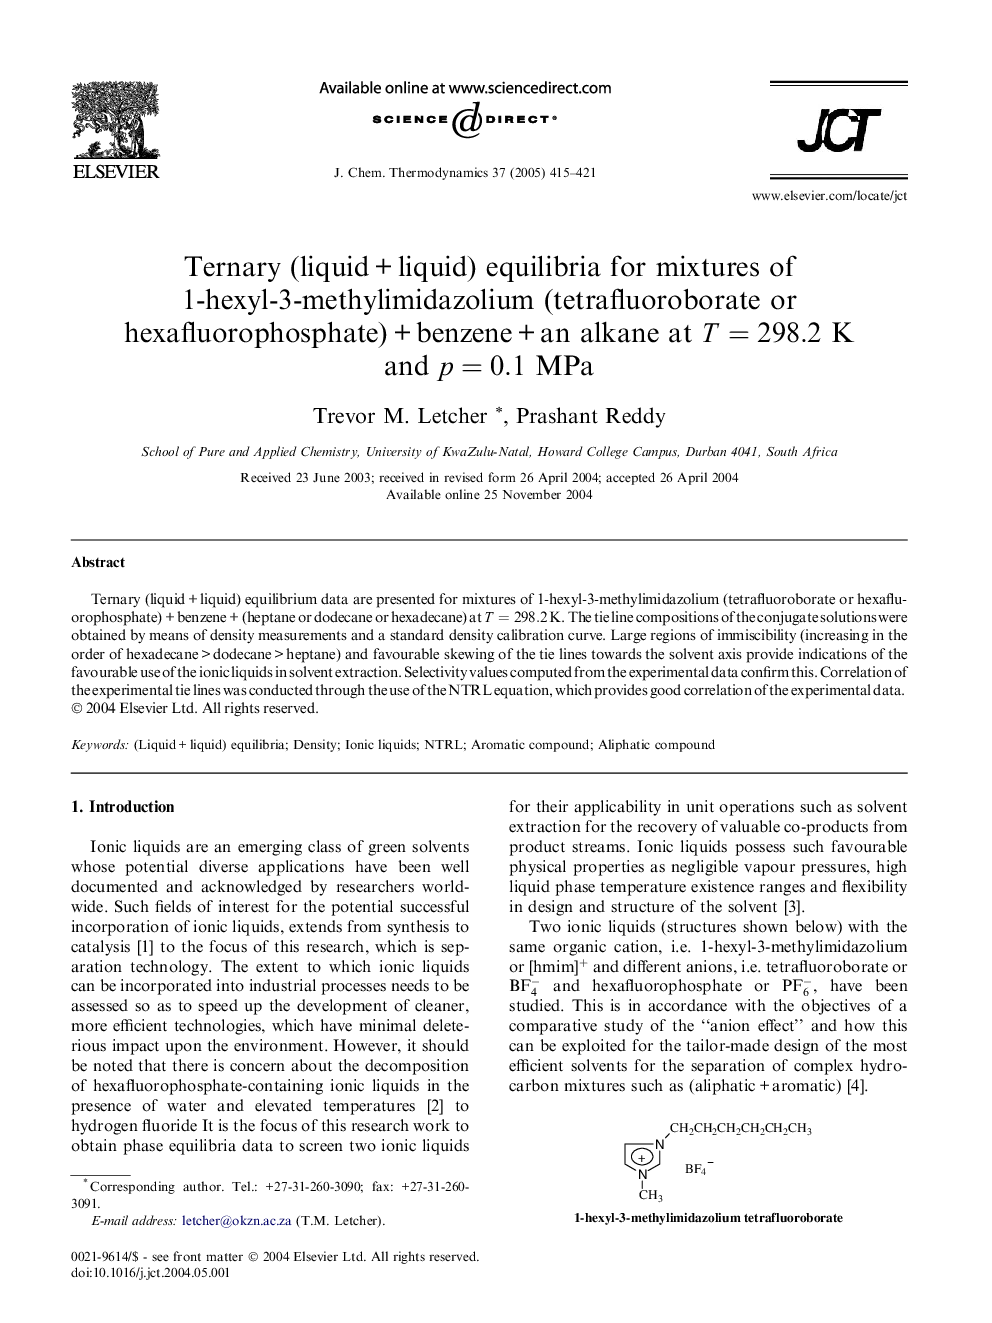 Ternary (liquidÂ +Â liquid) equilibria for mixtures of 1-hexyl-3-methylimidazolium (tetrafluoroborate or hexafluorophosphate)Â +Â benzeneÂ +Â an alkane at T=298.2 K and p=0.1 MPa